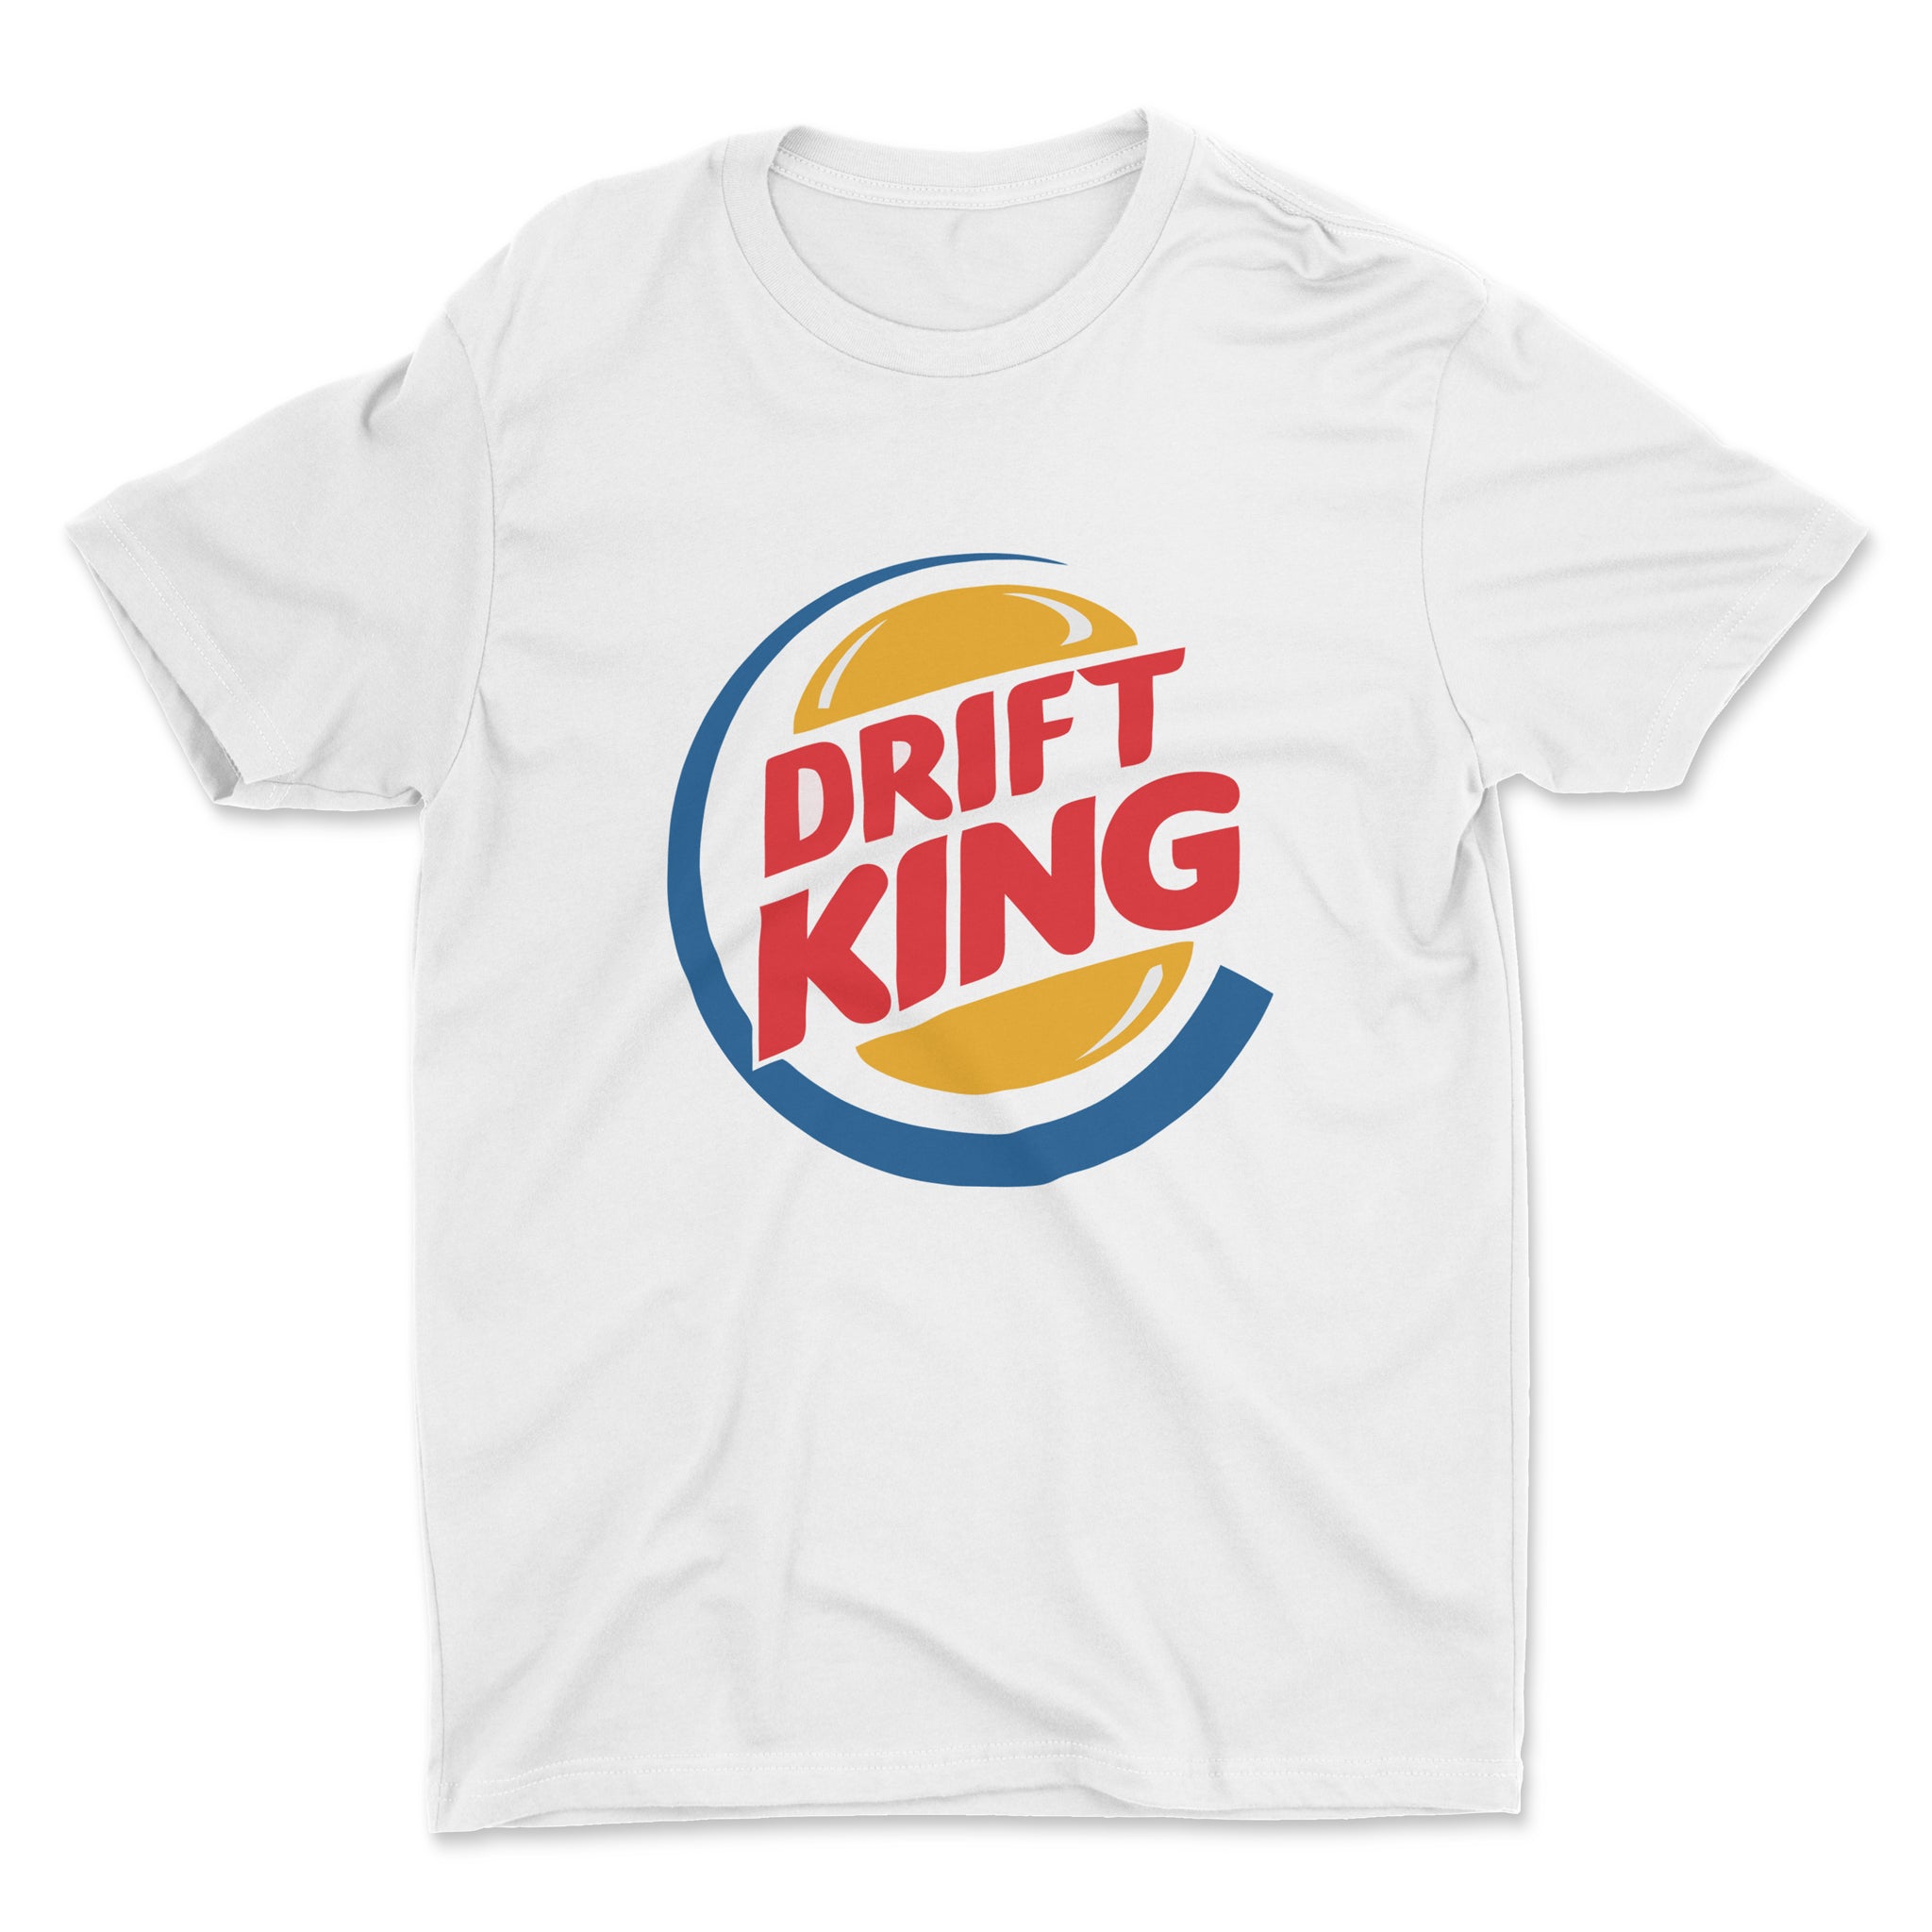 Drift King - Car T-Shirt - White